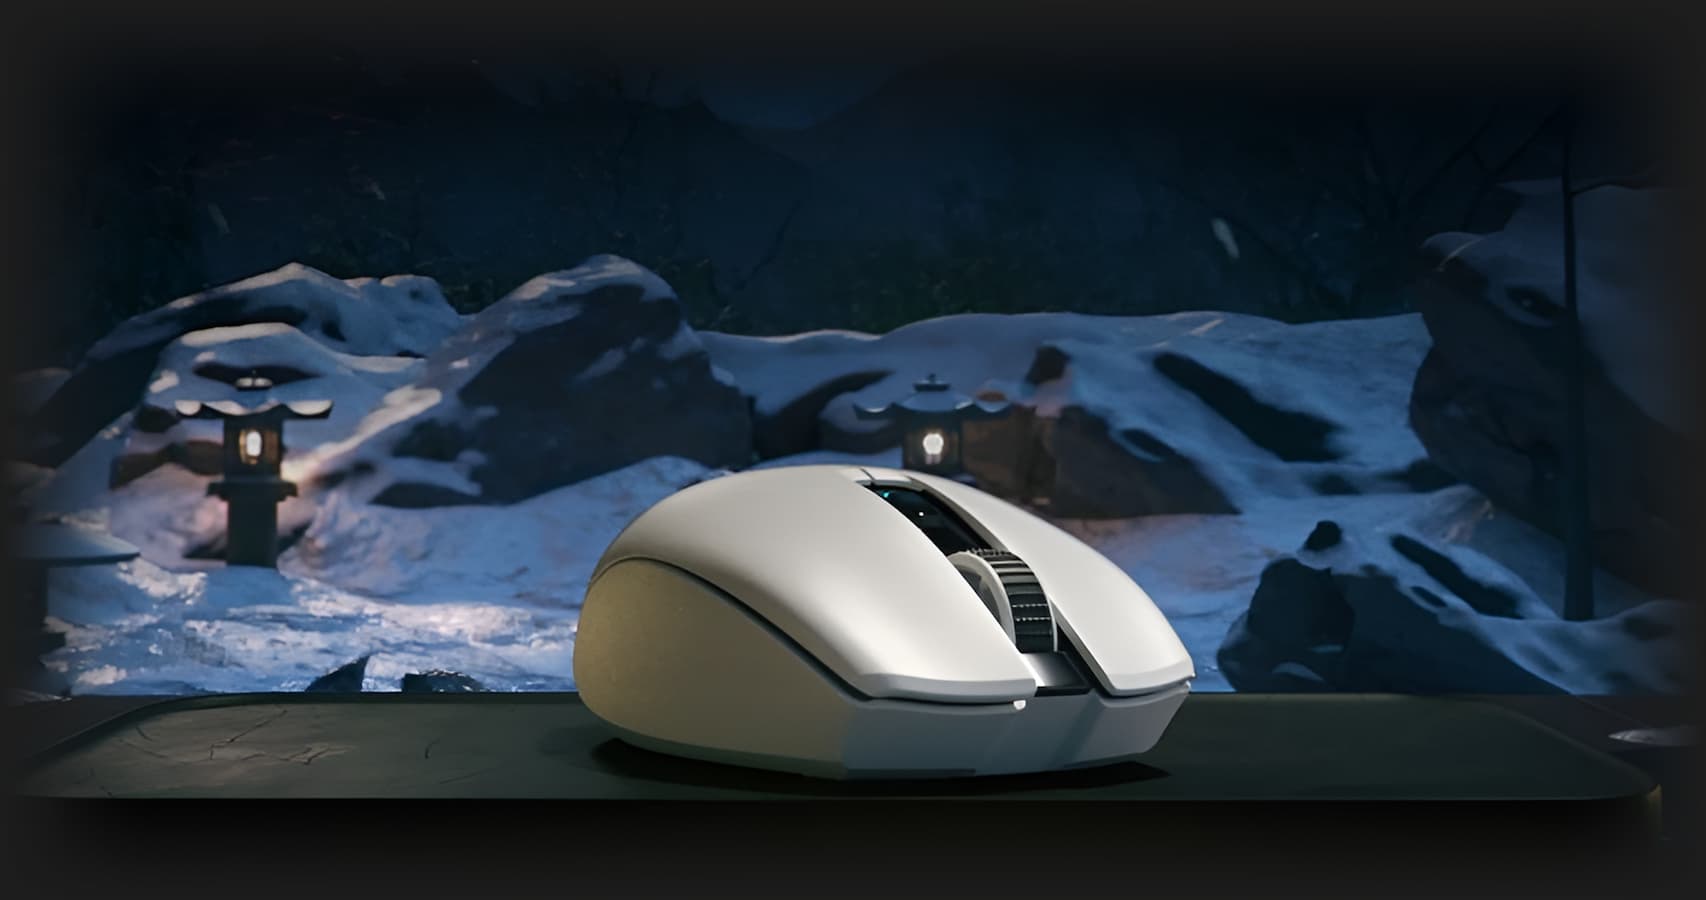 Игровая мышь Razer Orochi V2 Wireless (White)